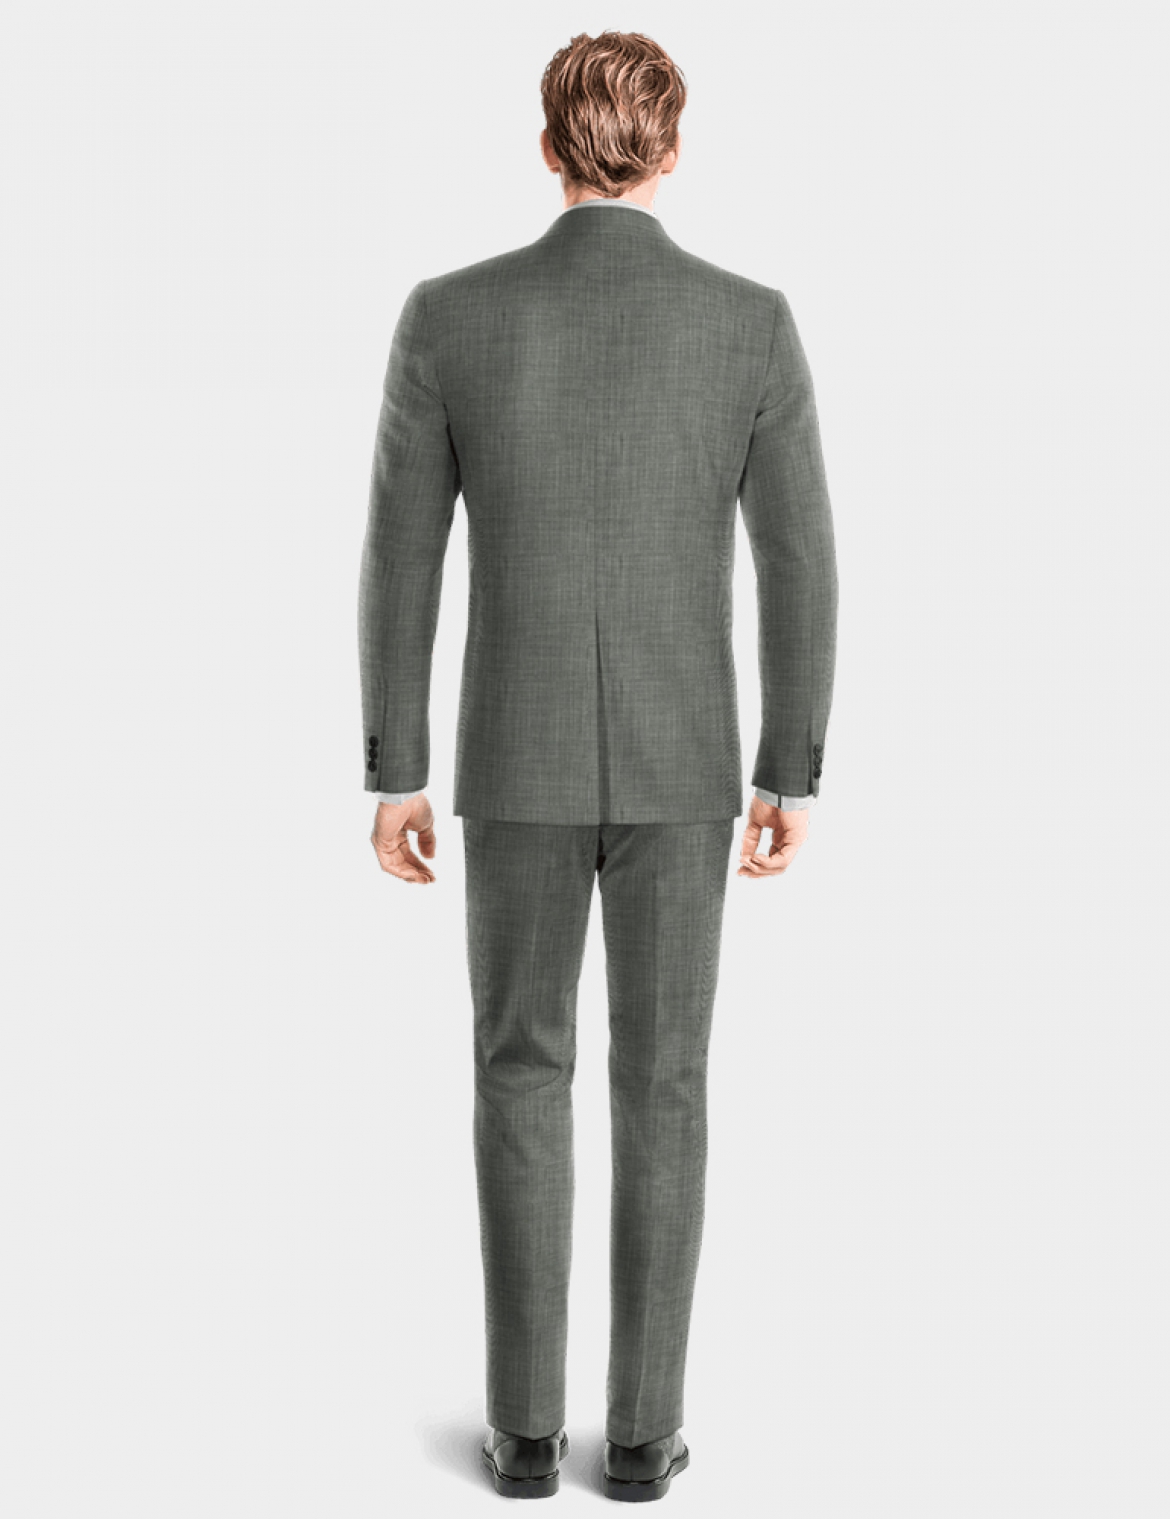 Grey tweed Suit